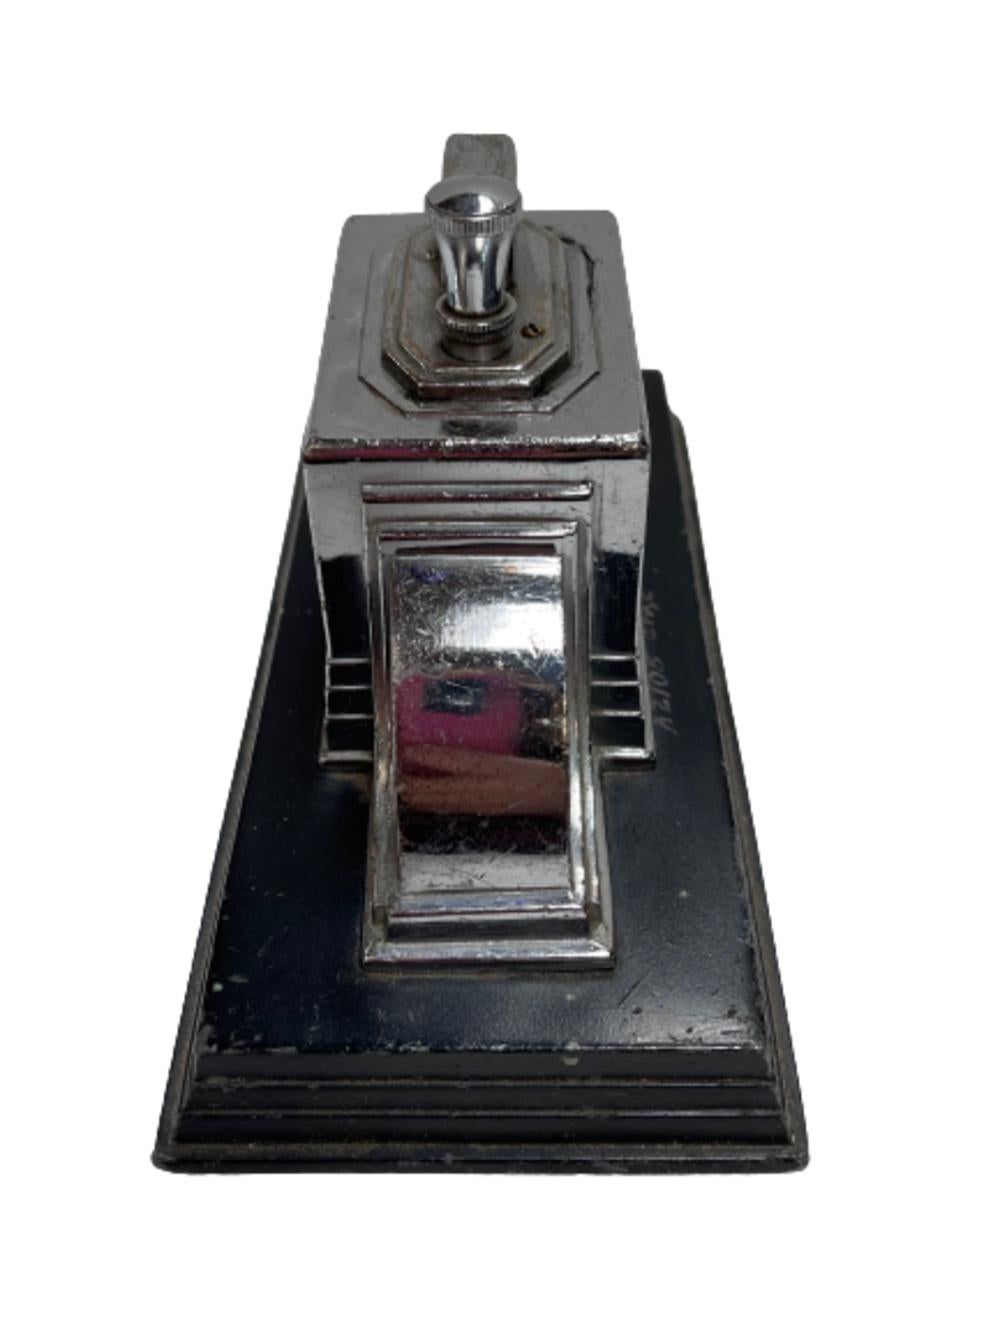 1938 compact lighter